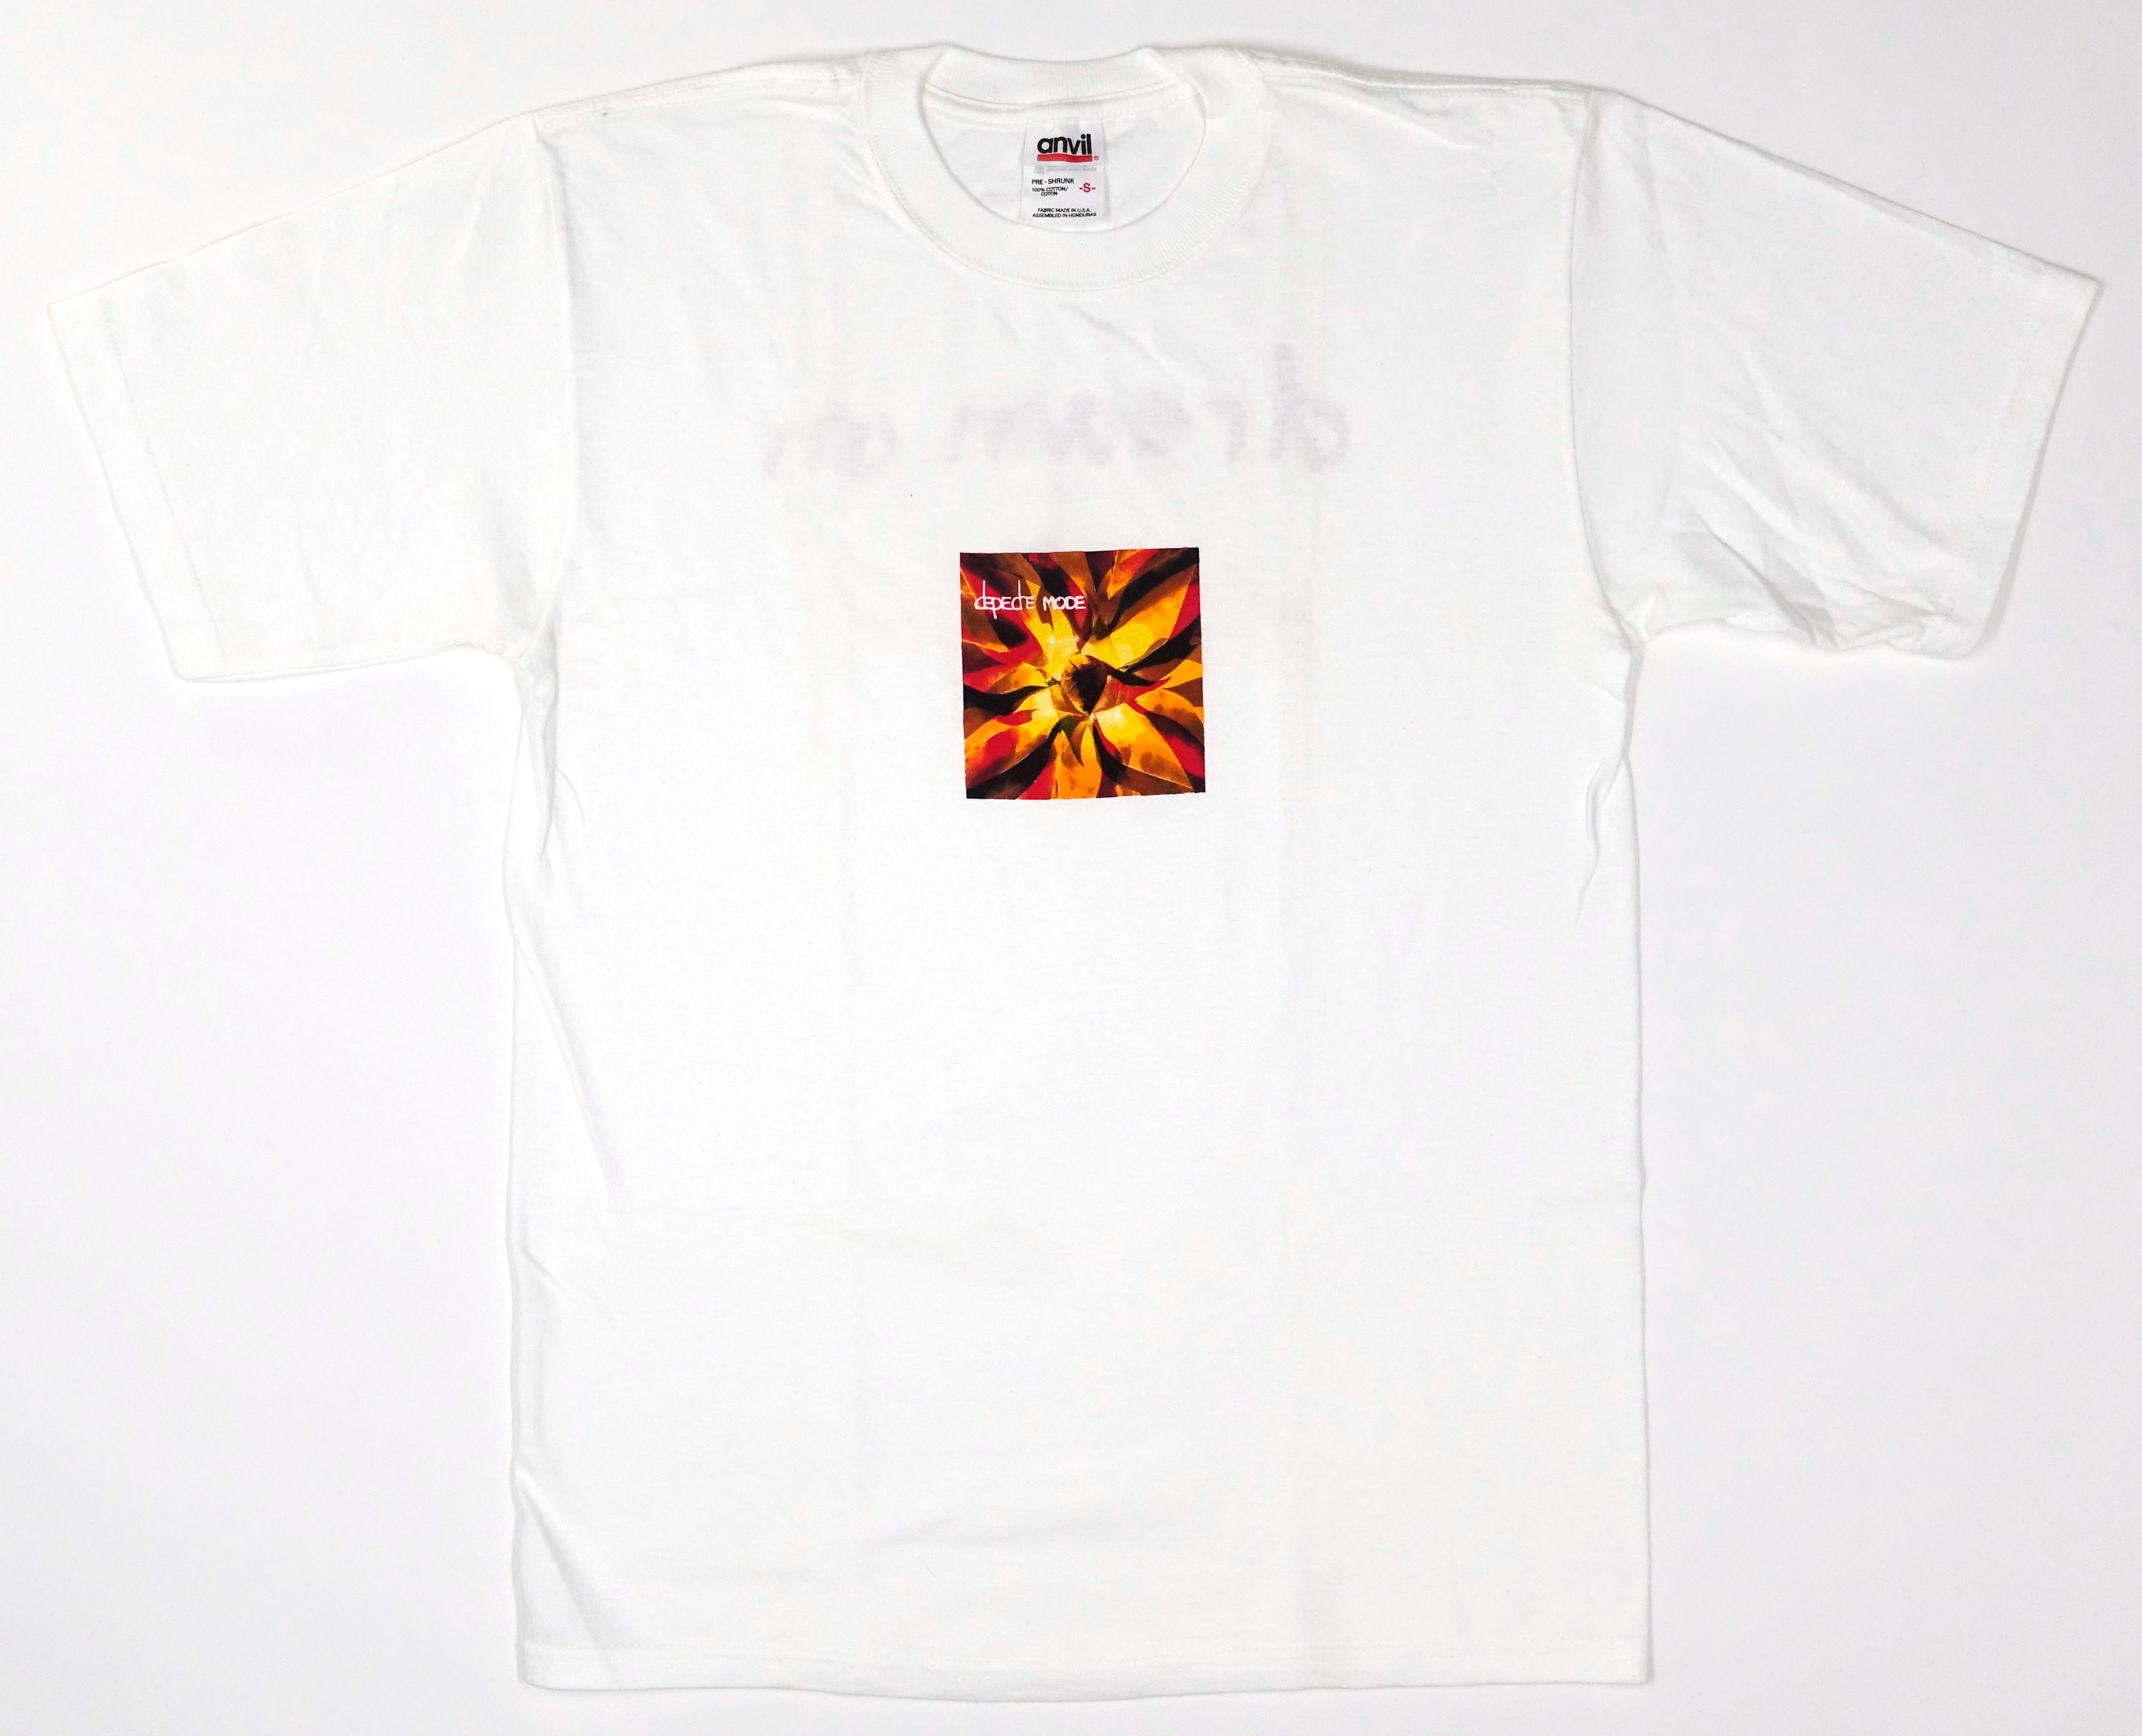 Depeche Mode – Dream On 2001 Promo Tour Shirt Size Small